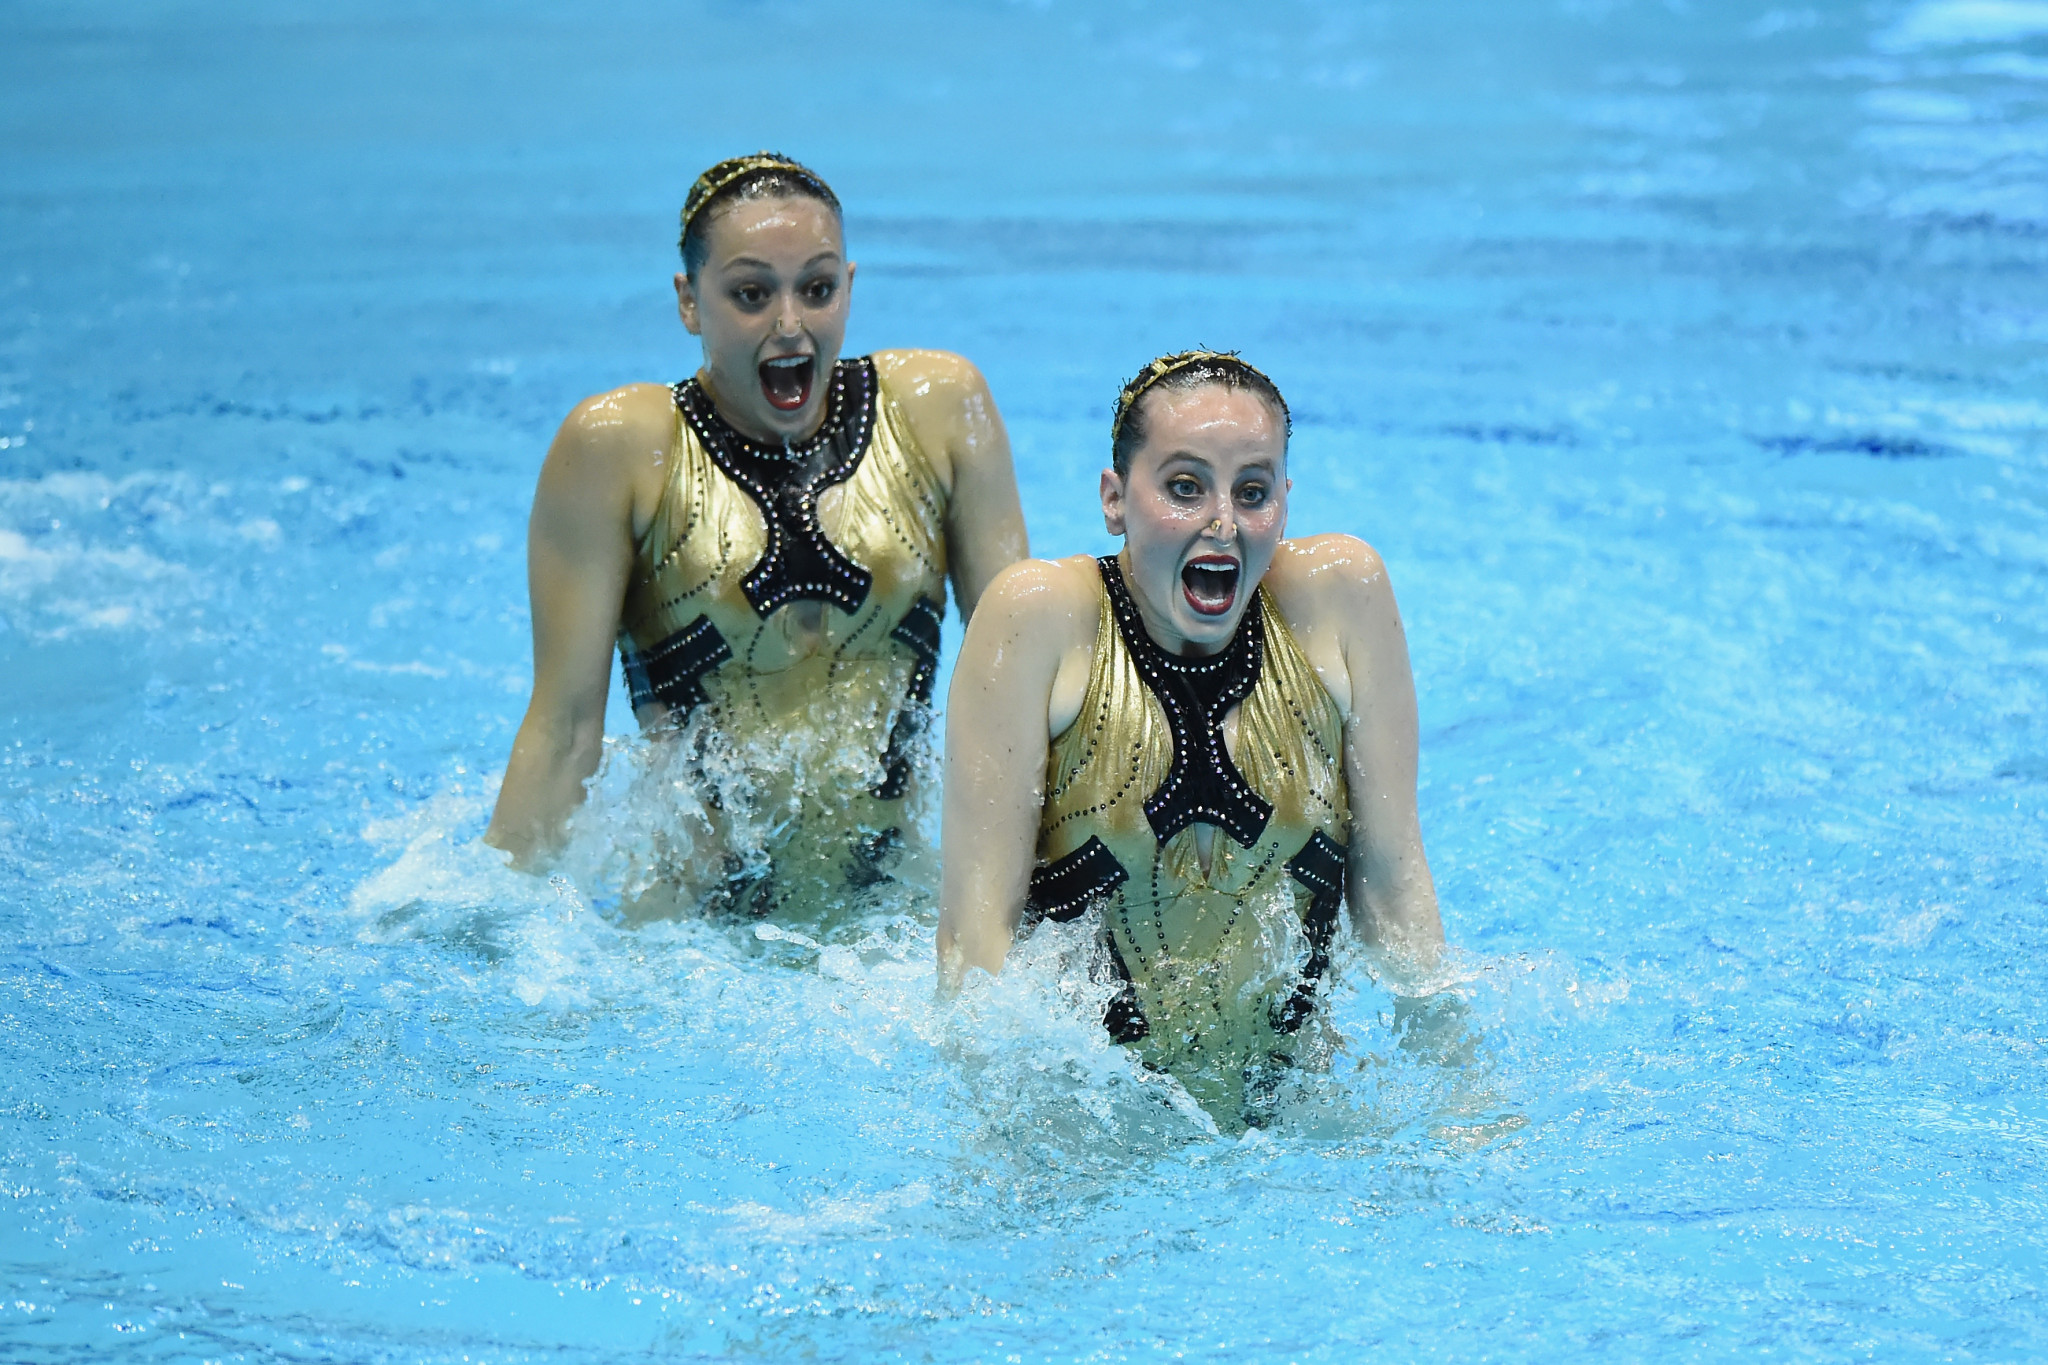 Spain targeting home success at Artistic Swimming World Series leg in Madrid